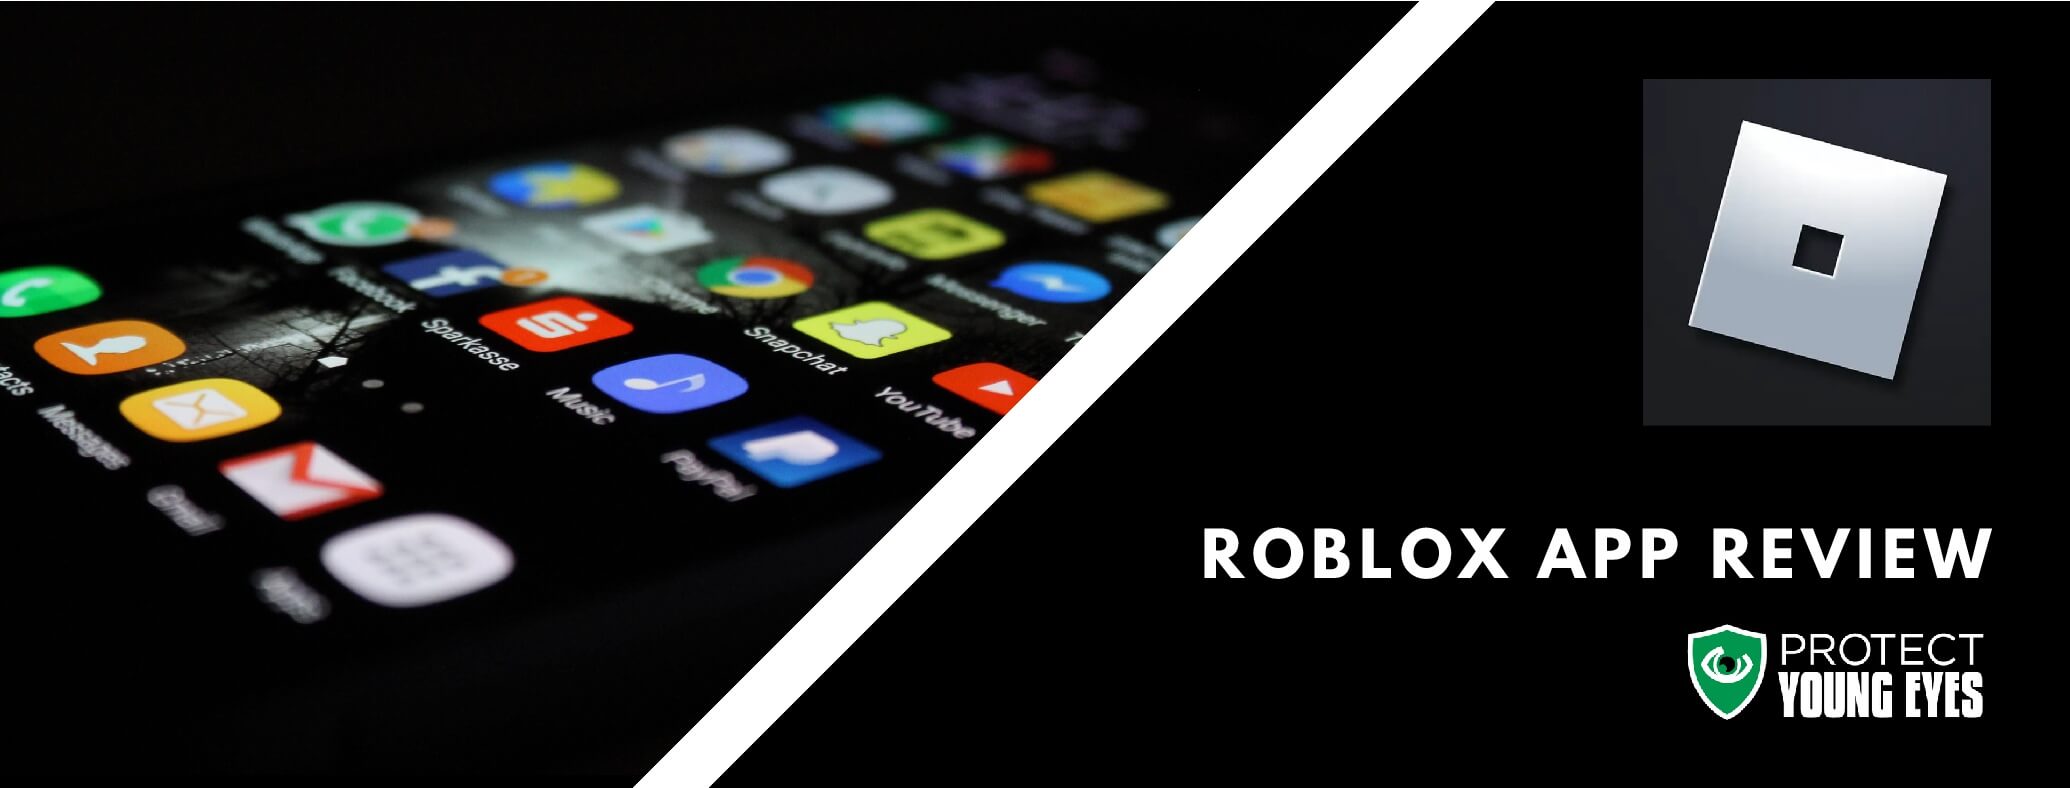 Roblox studio download tablet amazon fire